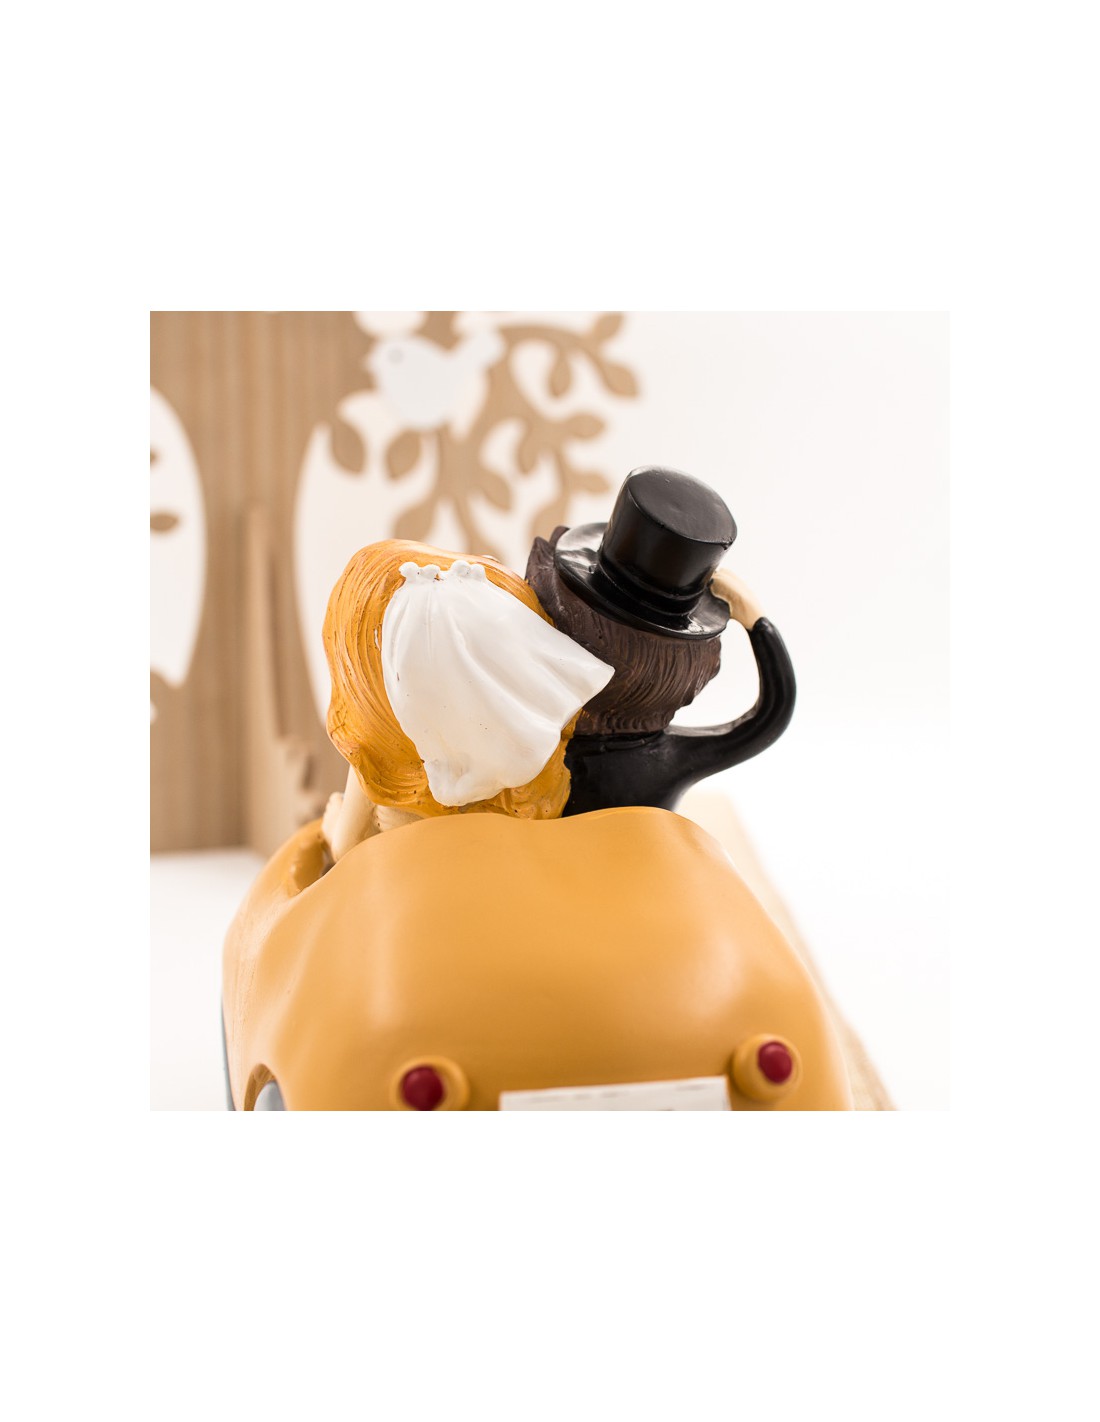 Novodistribuciones.com - FIGURA NOVIOS COCHE PARA TARTA DE BODA 12,64€ Más  info clic aquí>  /50198-figura-novios-coche-para-tarta-de-boda #figurasnovios  #figurasnoviostarta #figurasparatartadenovios